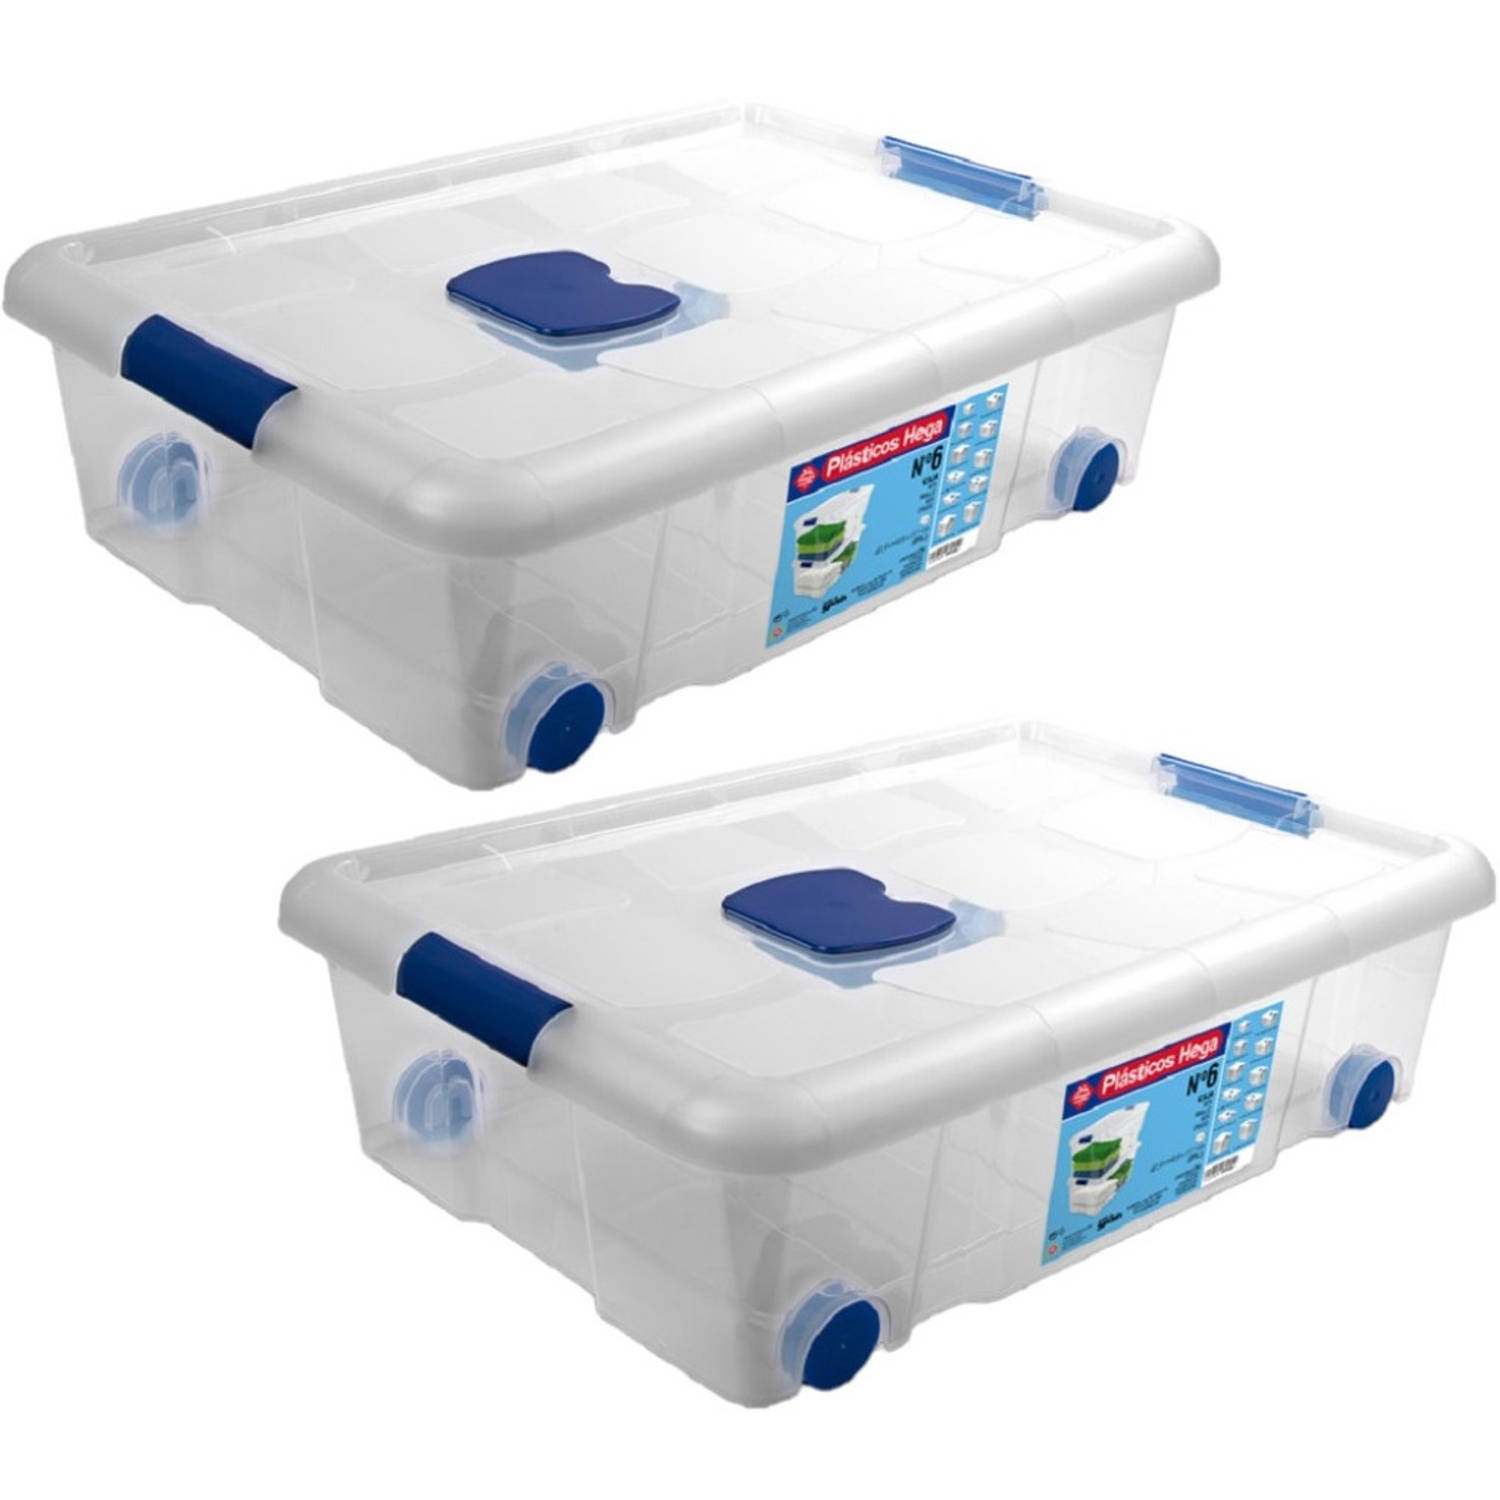 2x Opbergboxen/opbergdozen met deksel en wieltjes 31 liter kunststof transparant/blauw - Opbergbox